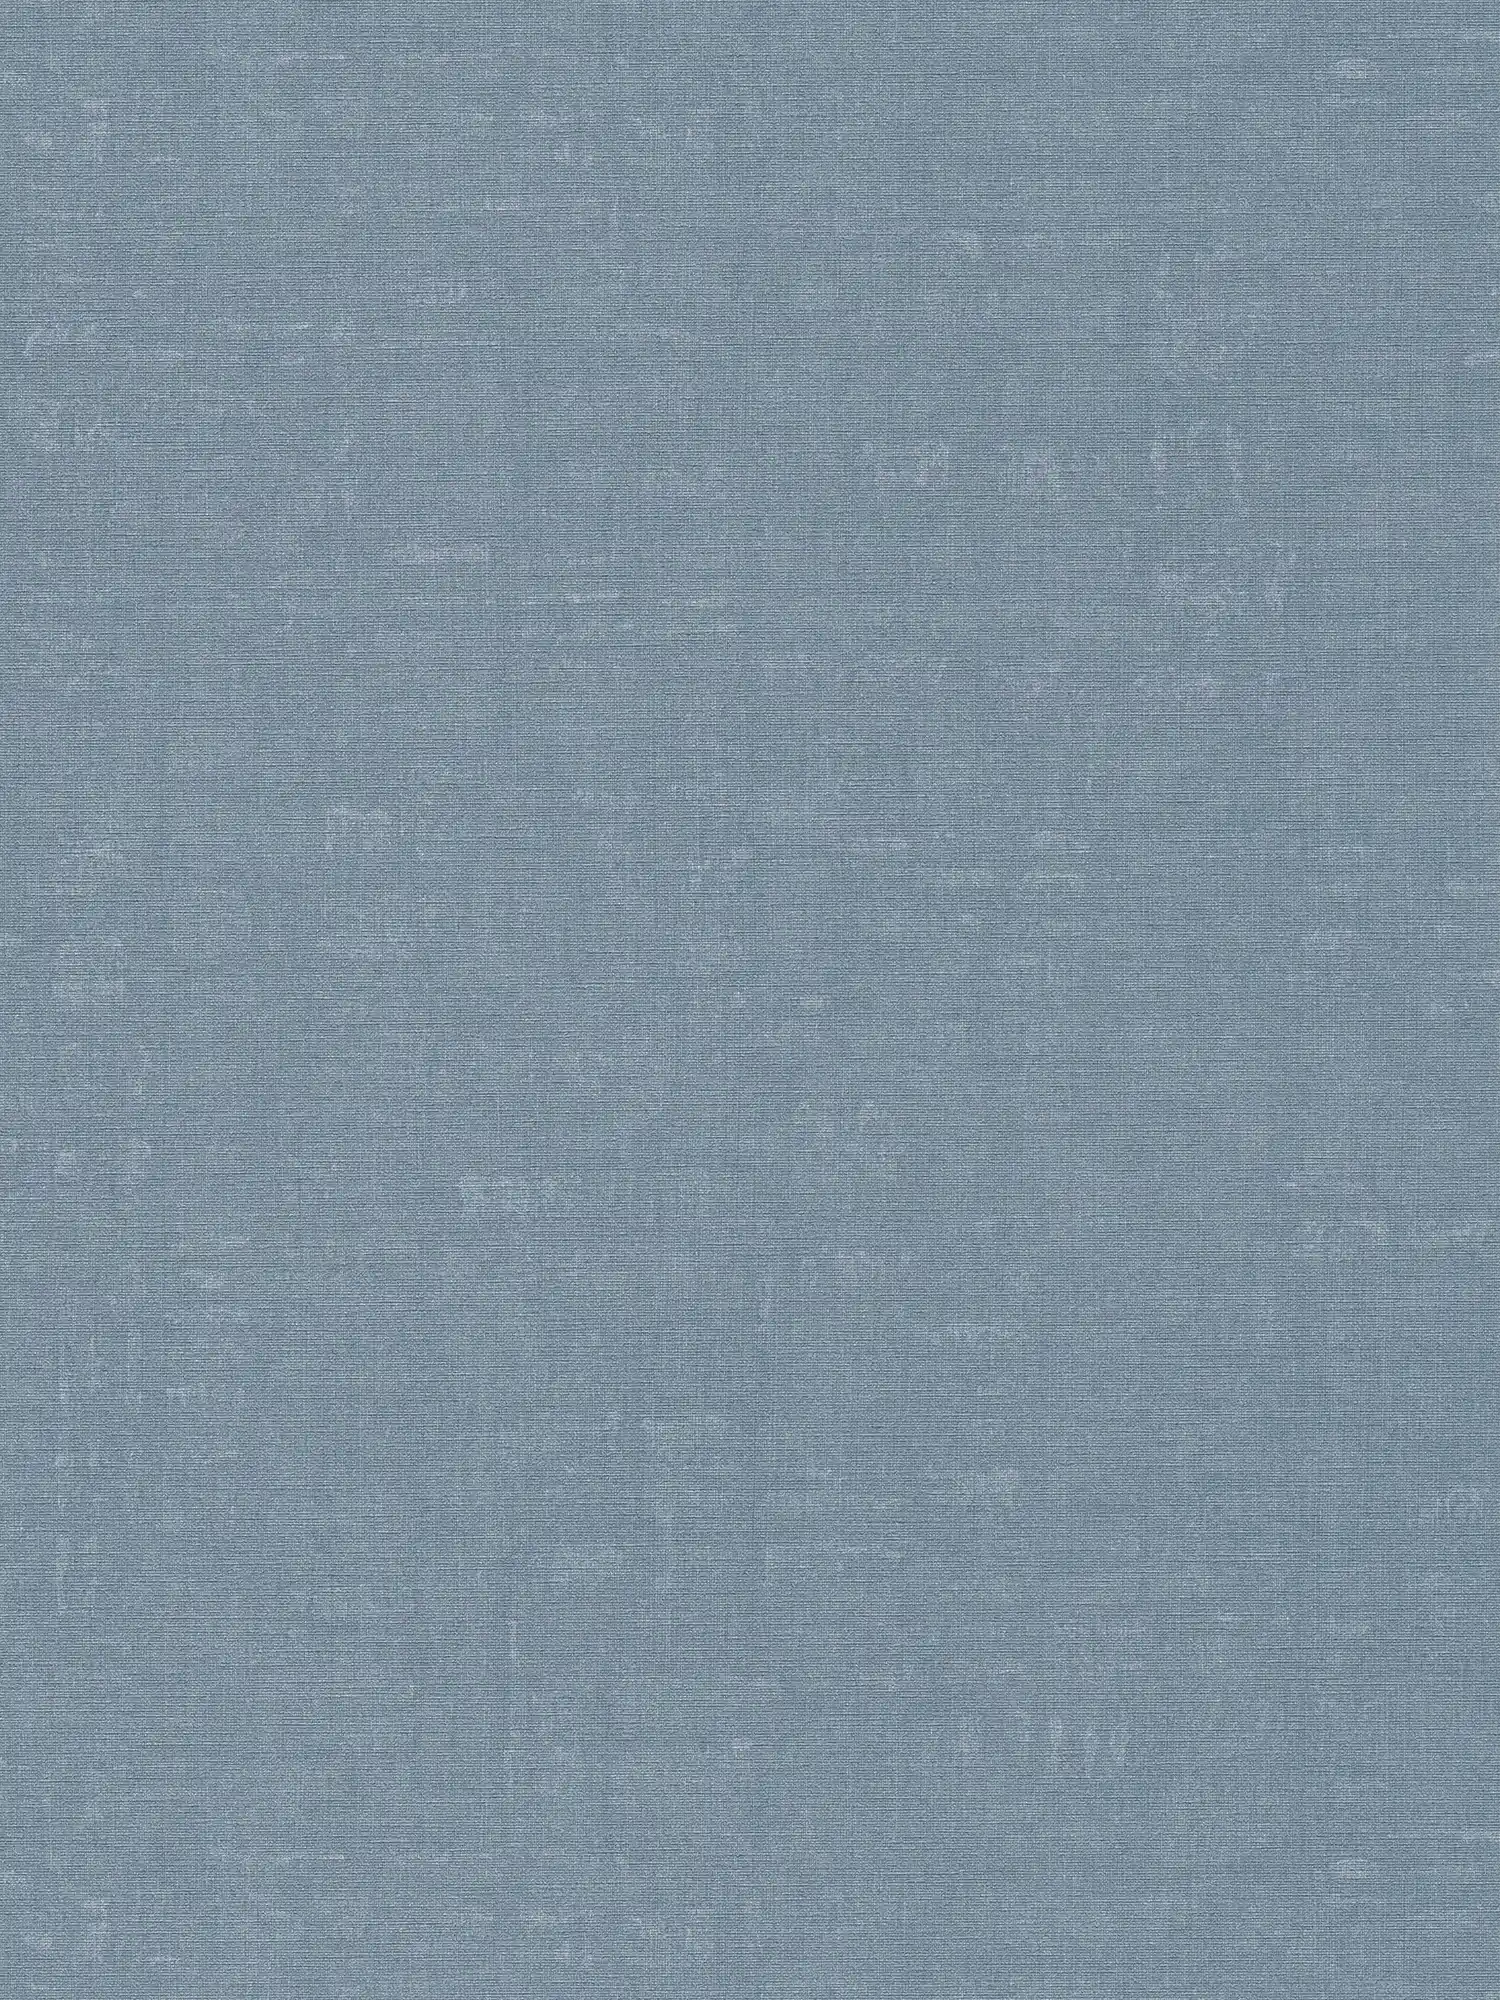 Melange wallpaper plain with structure design - blue
